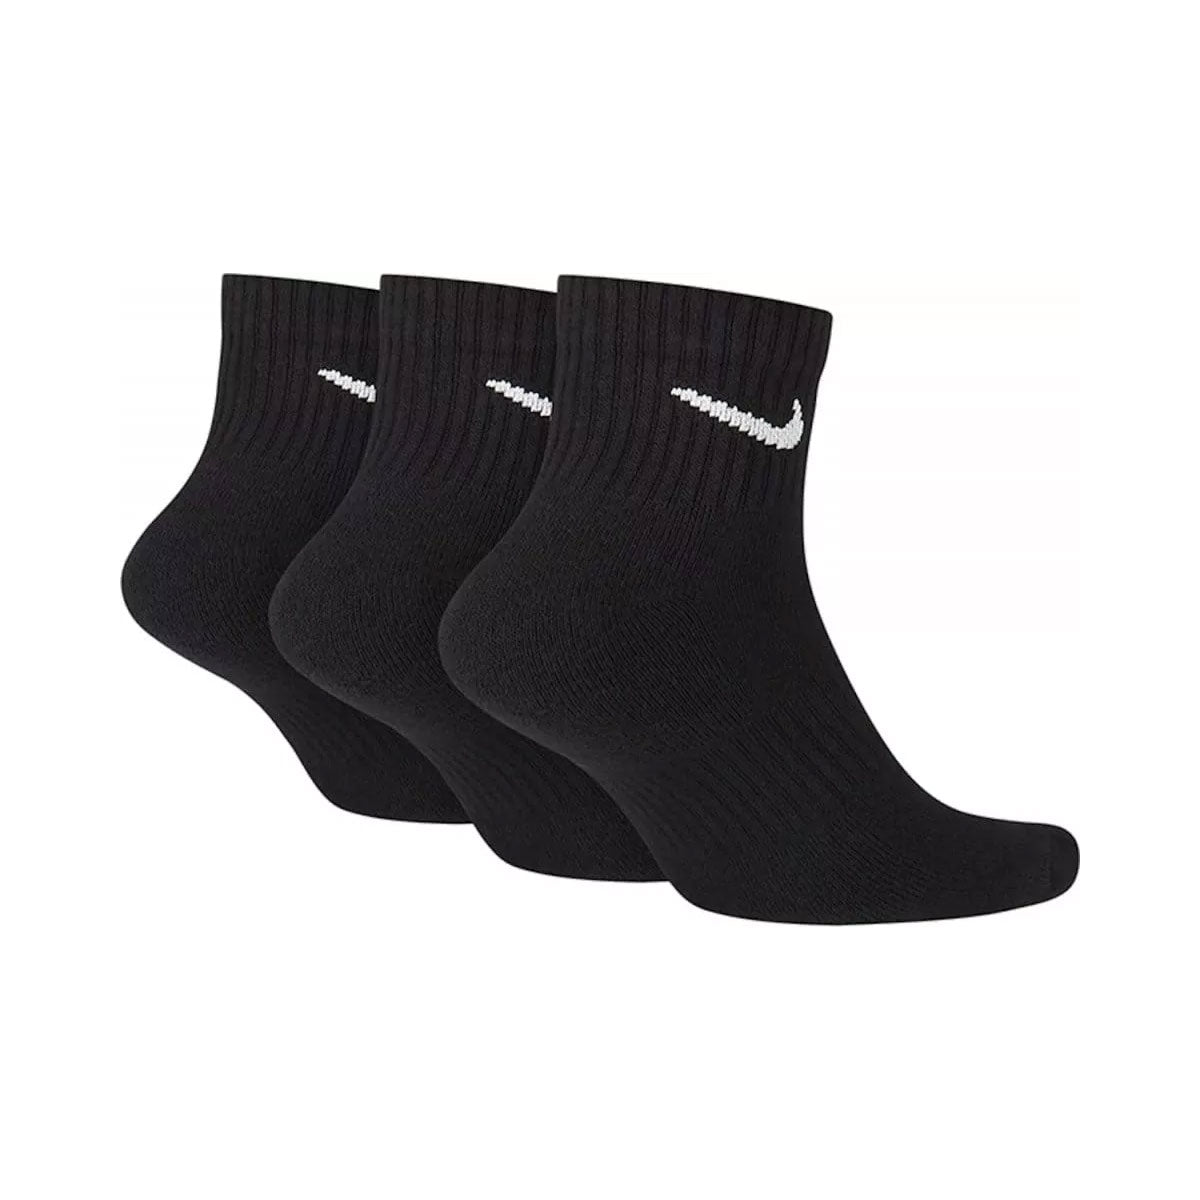 Nike Cushioned Training Ankle Socks (3pairs)